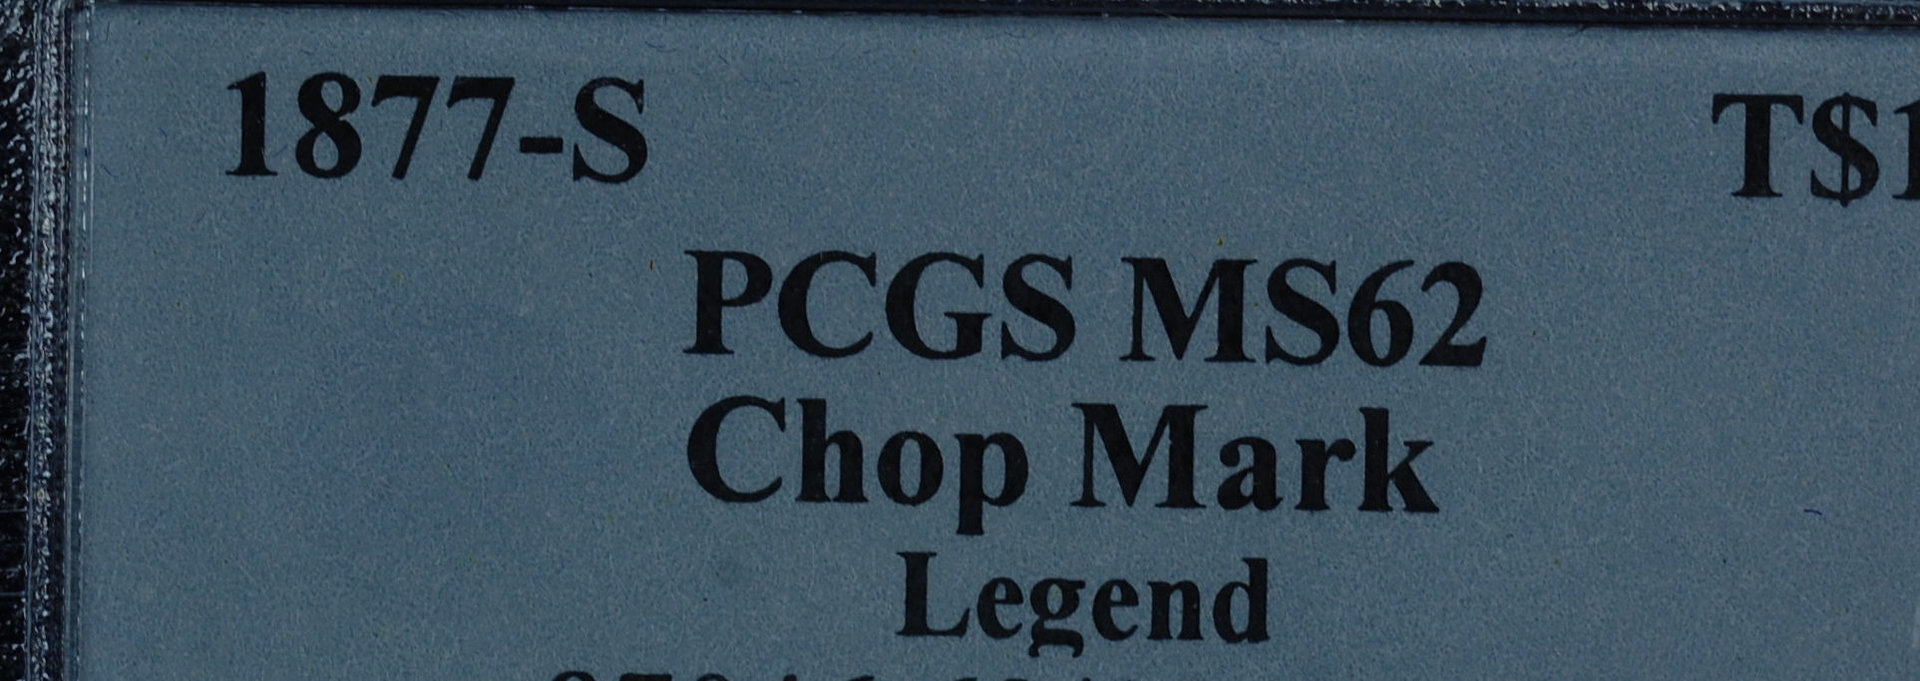 1877-s chop label  legend.jpg